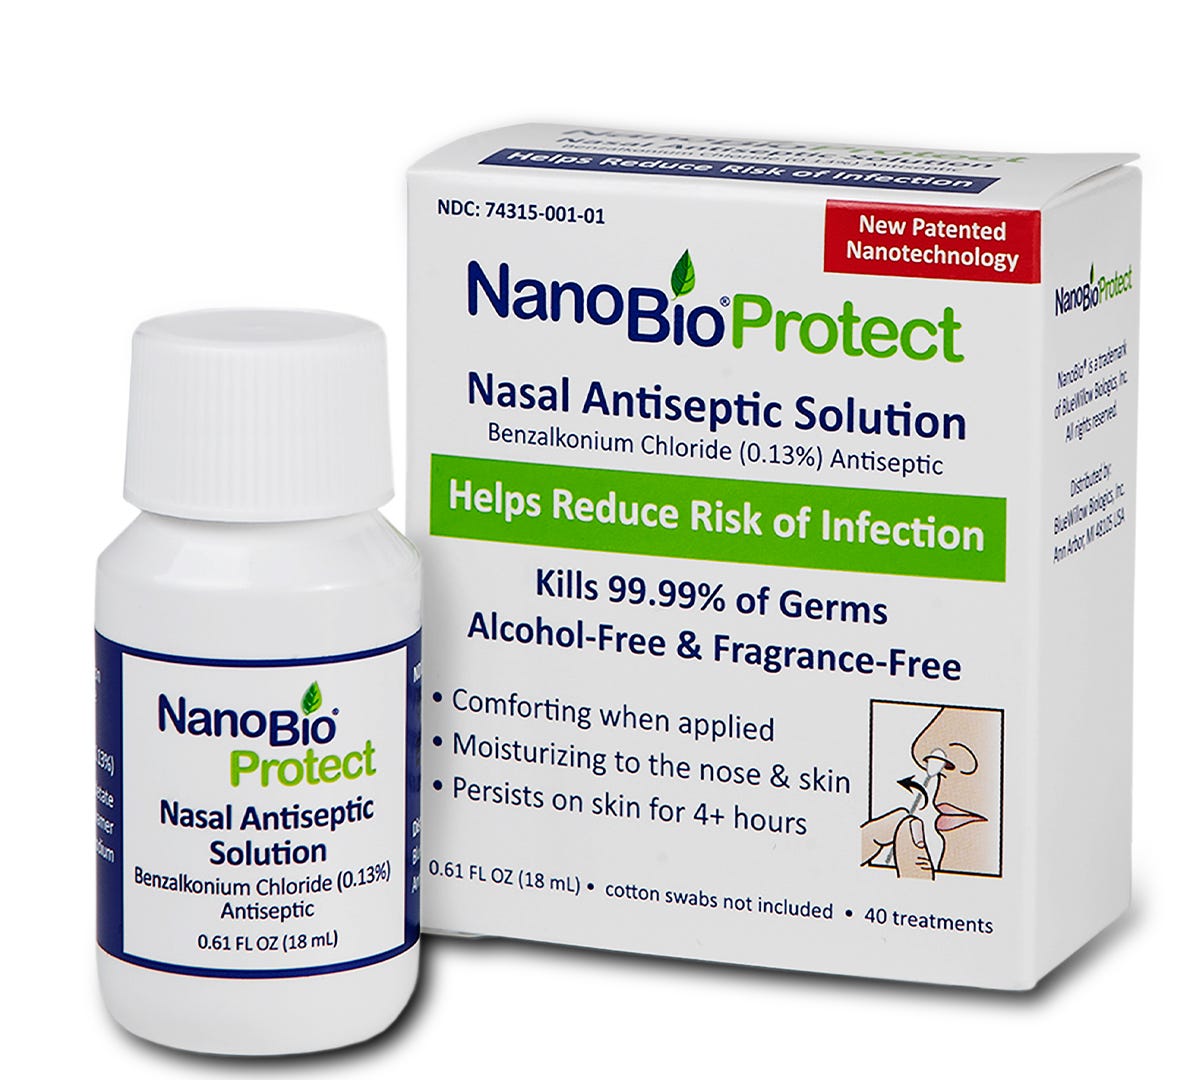 NanoBio Protect nasal antiseptic kills 